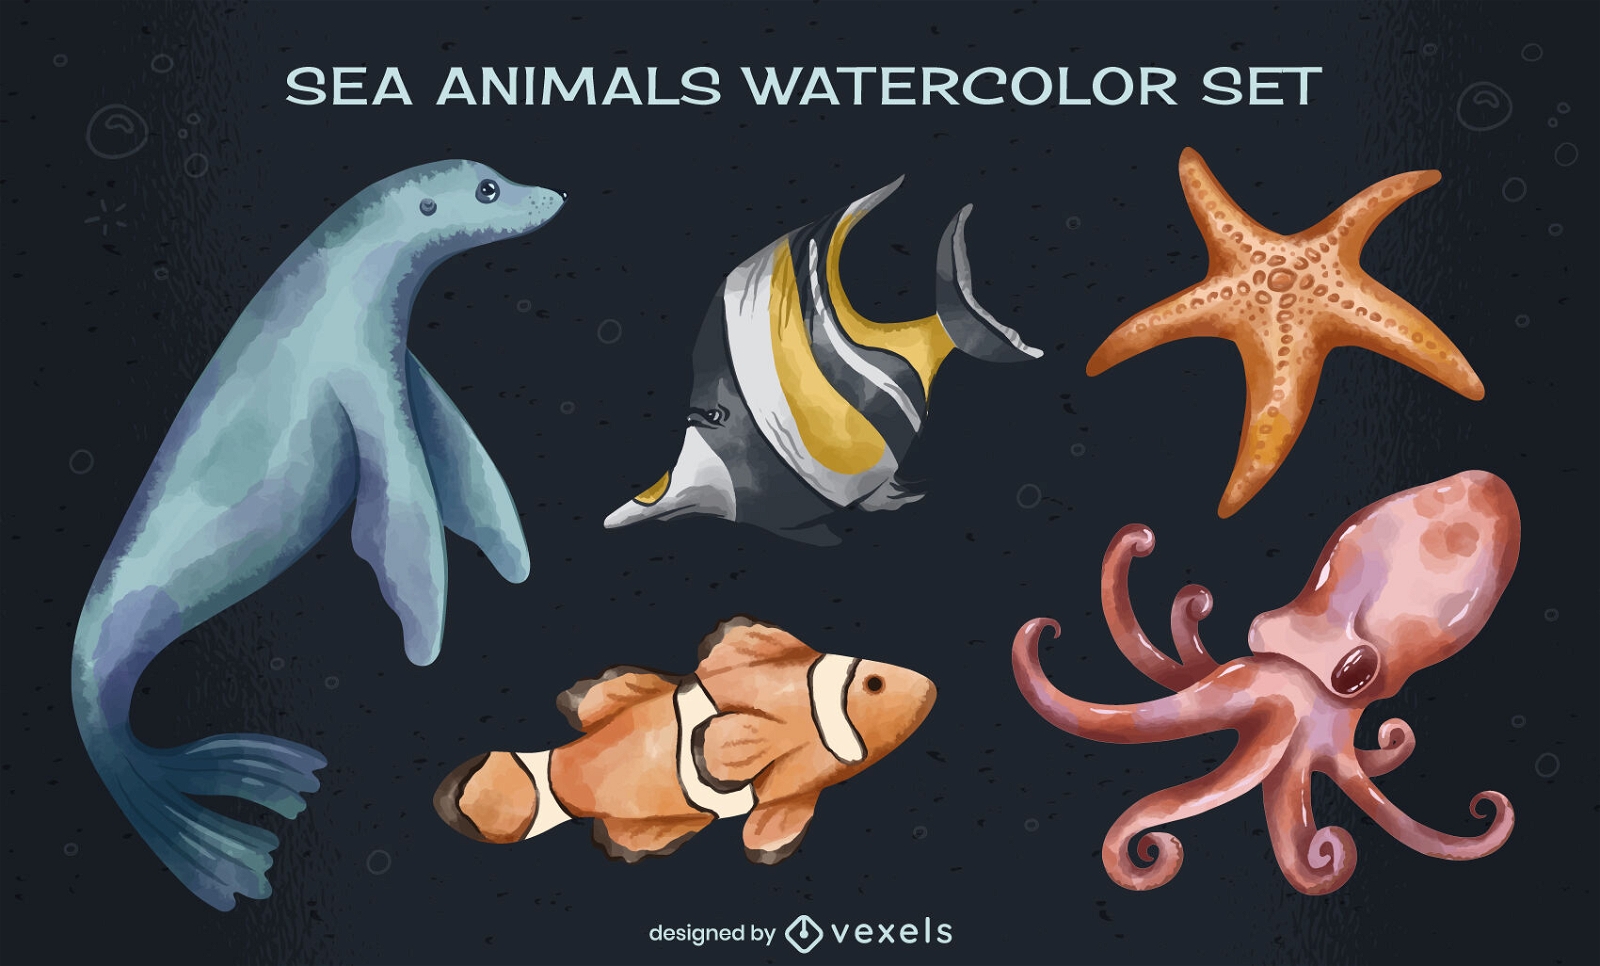 Sea animals watercolor illustrations set